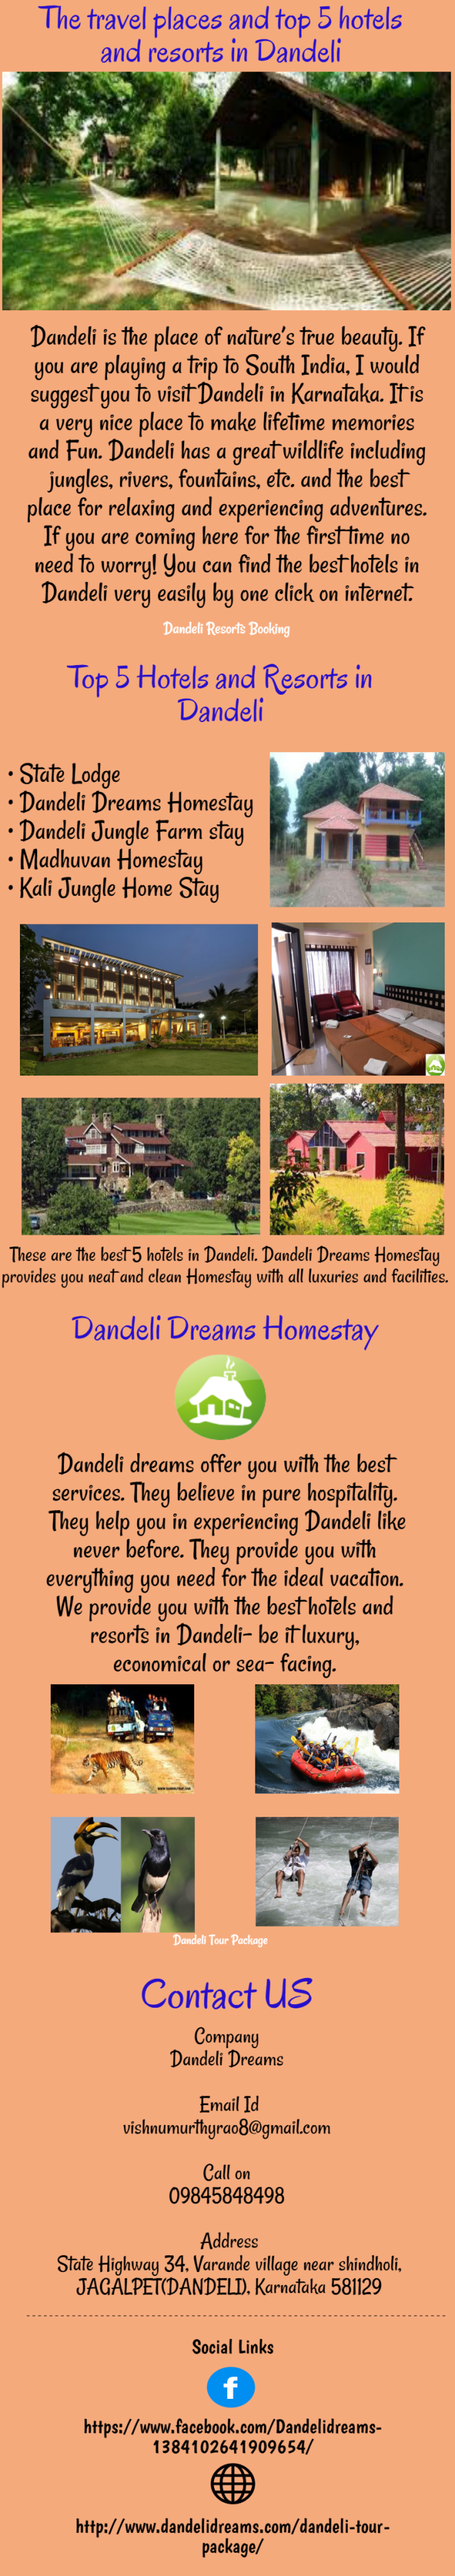 The best hotels and resorts in Dandeli 2017- Dandeli Dreams.png